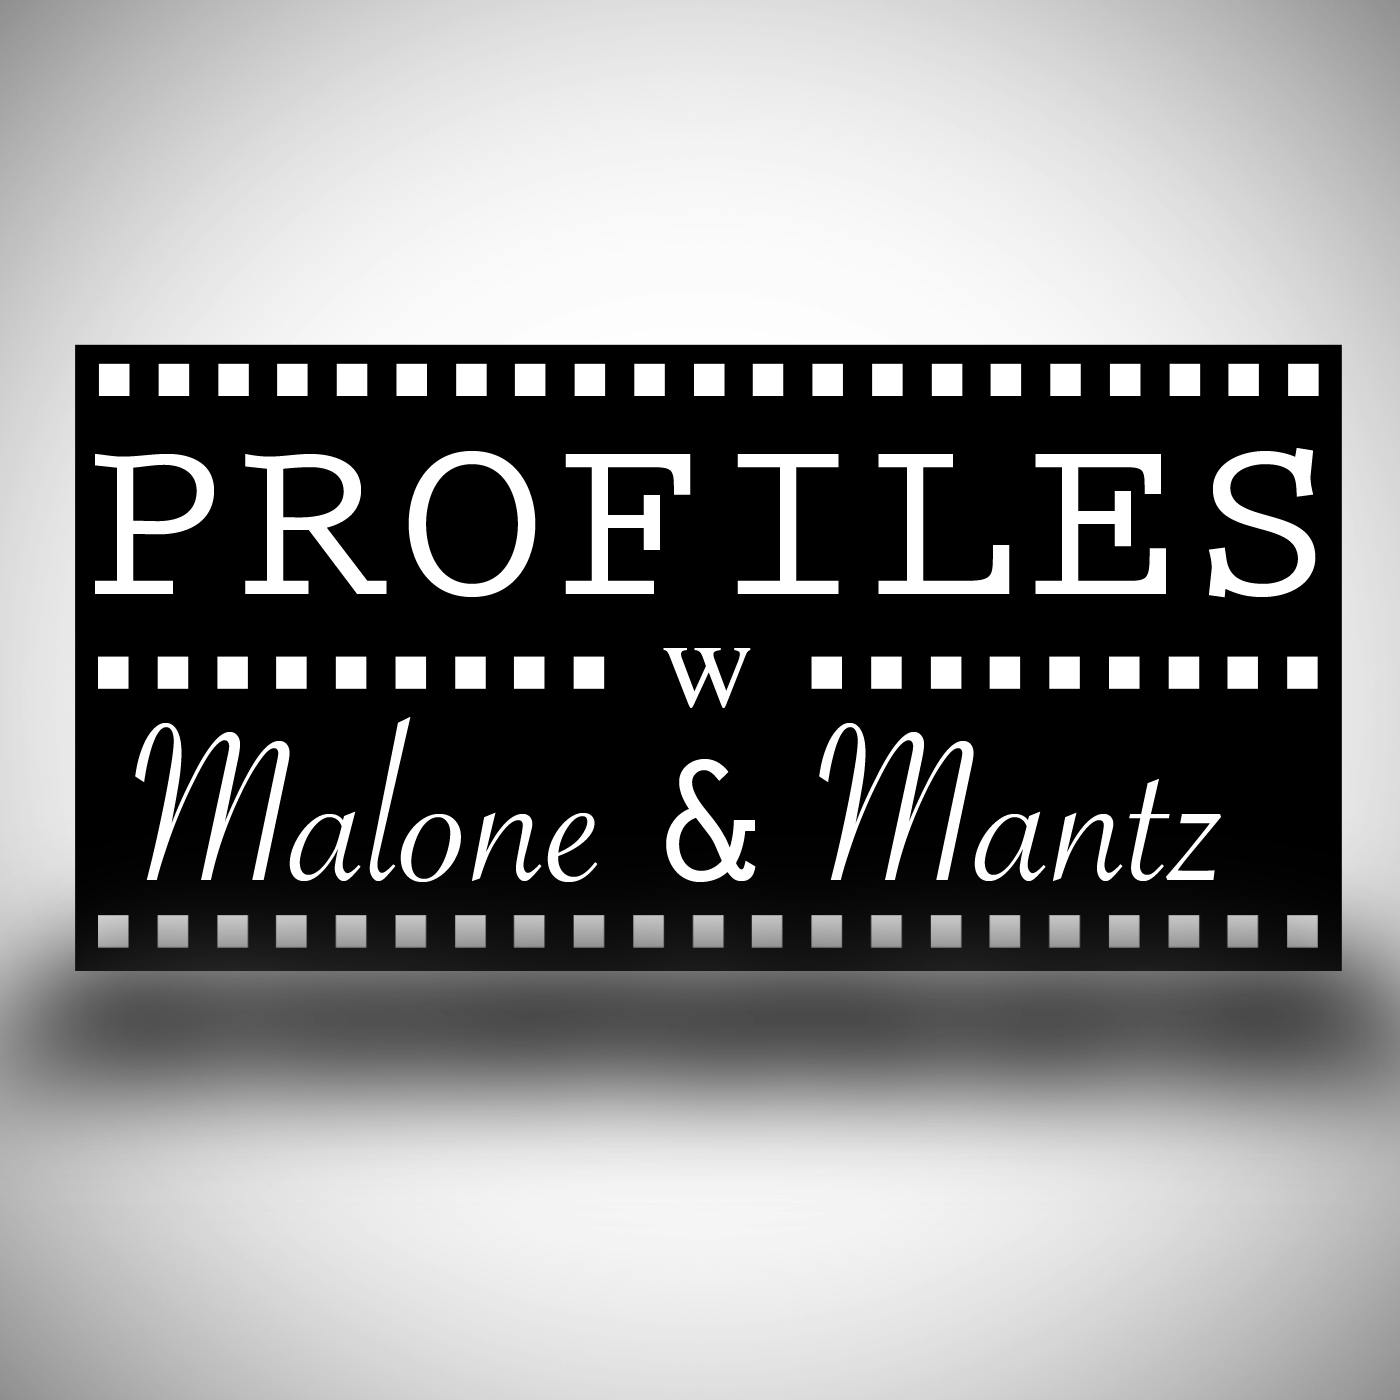 Robert Zemeckis Profile – Episode #41 (October 13th, 2015)